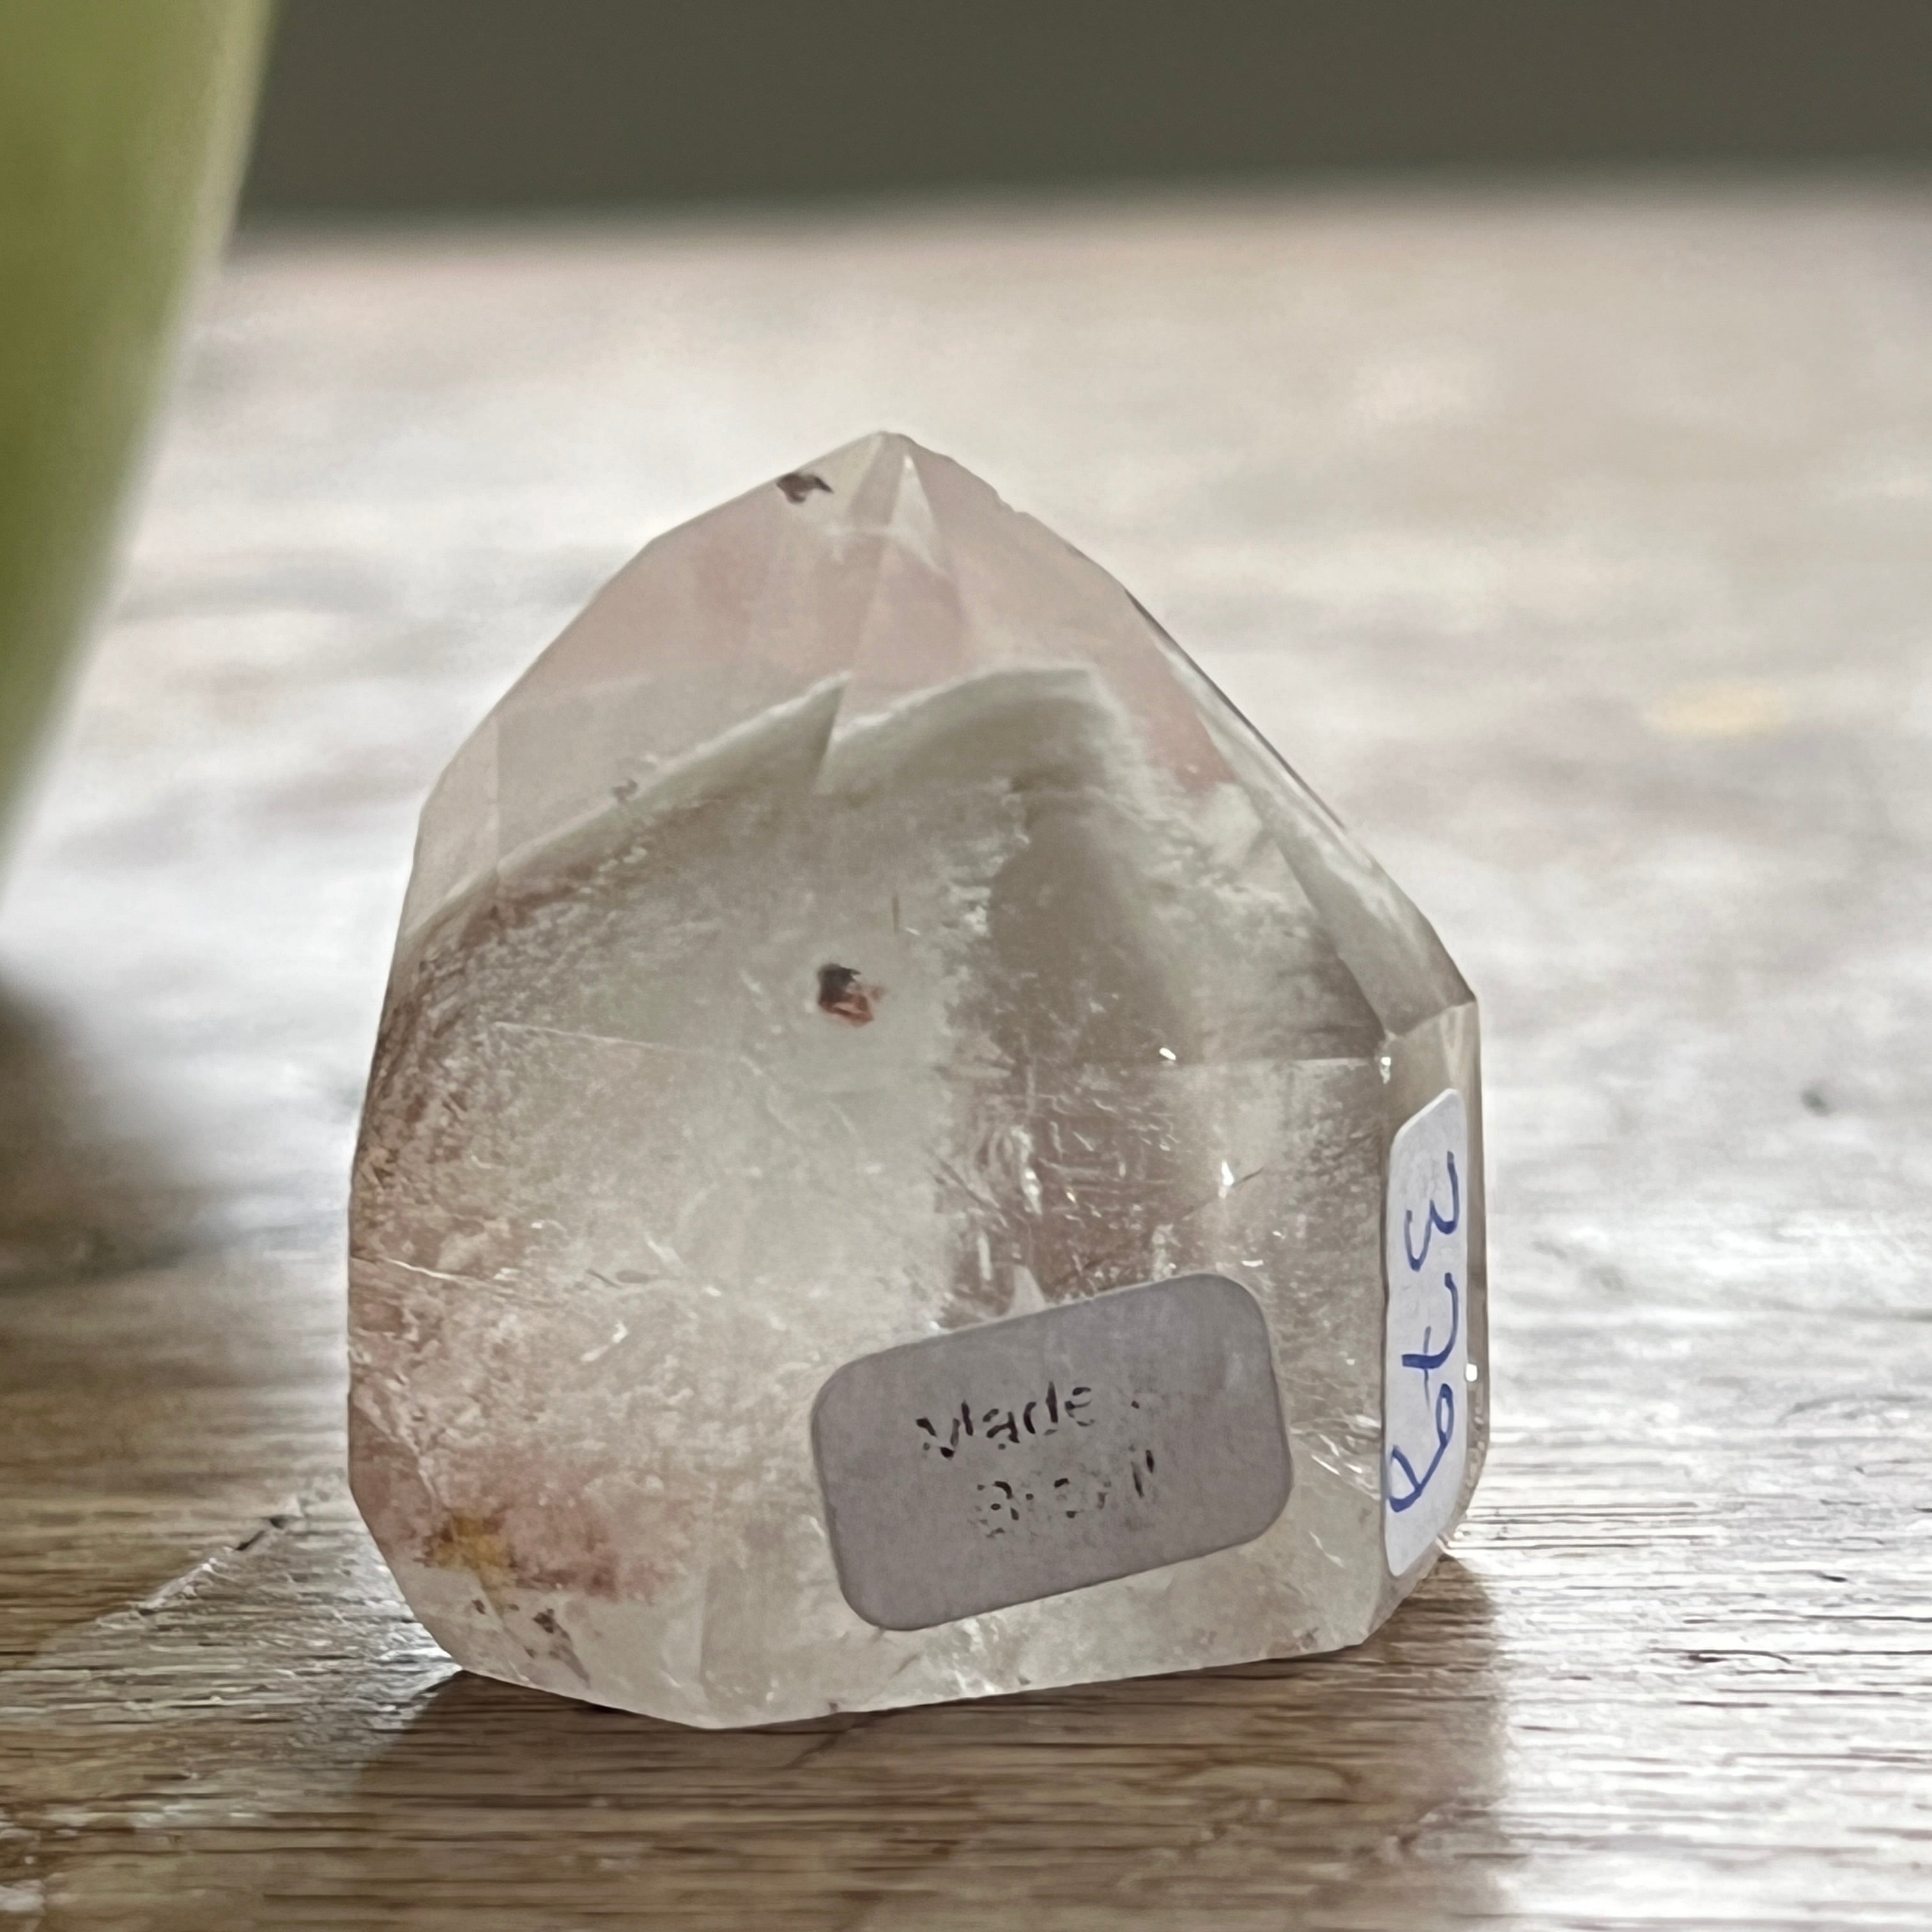 Unique Citrin phantom quartz from Brazil